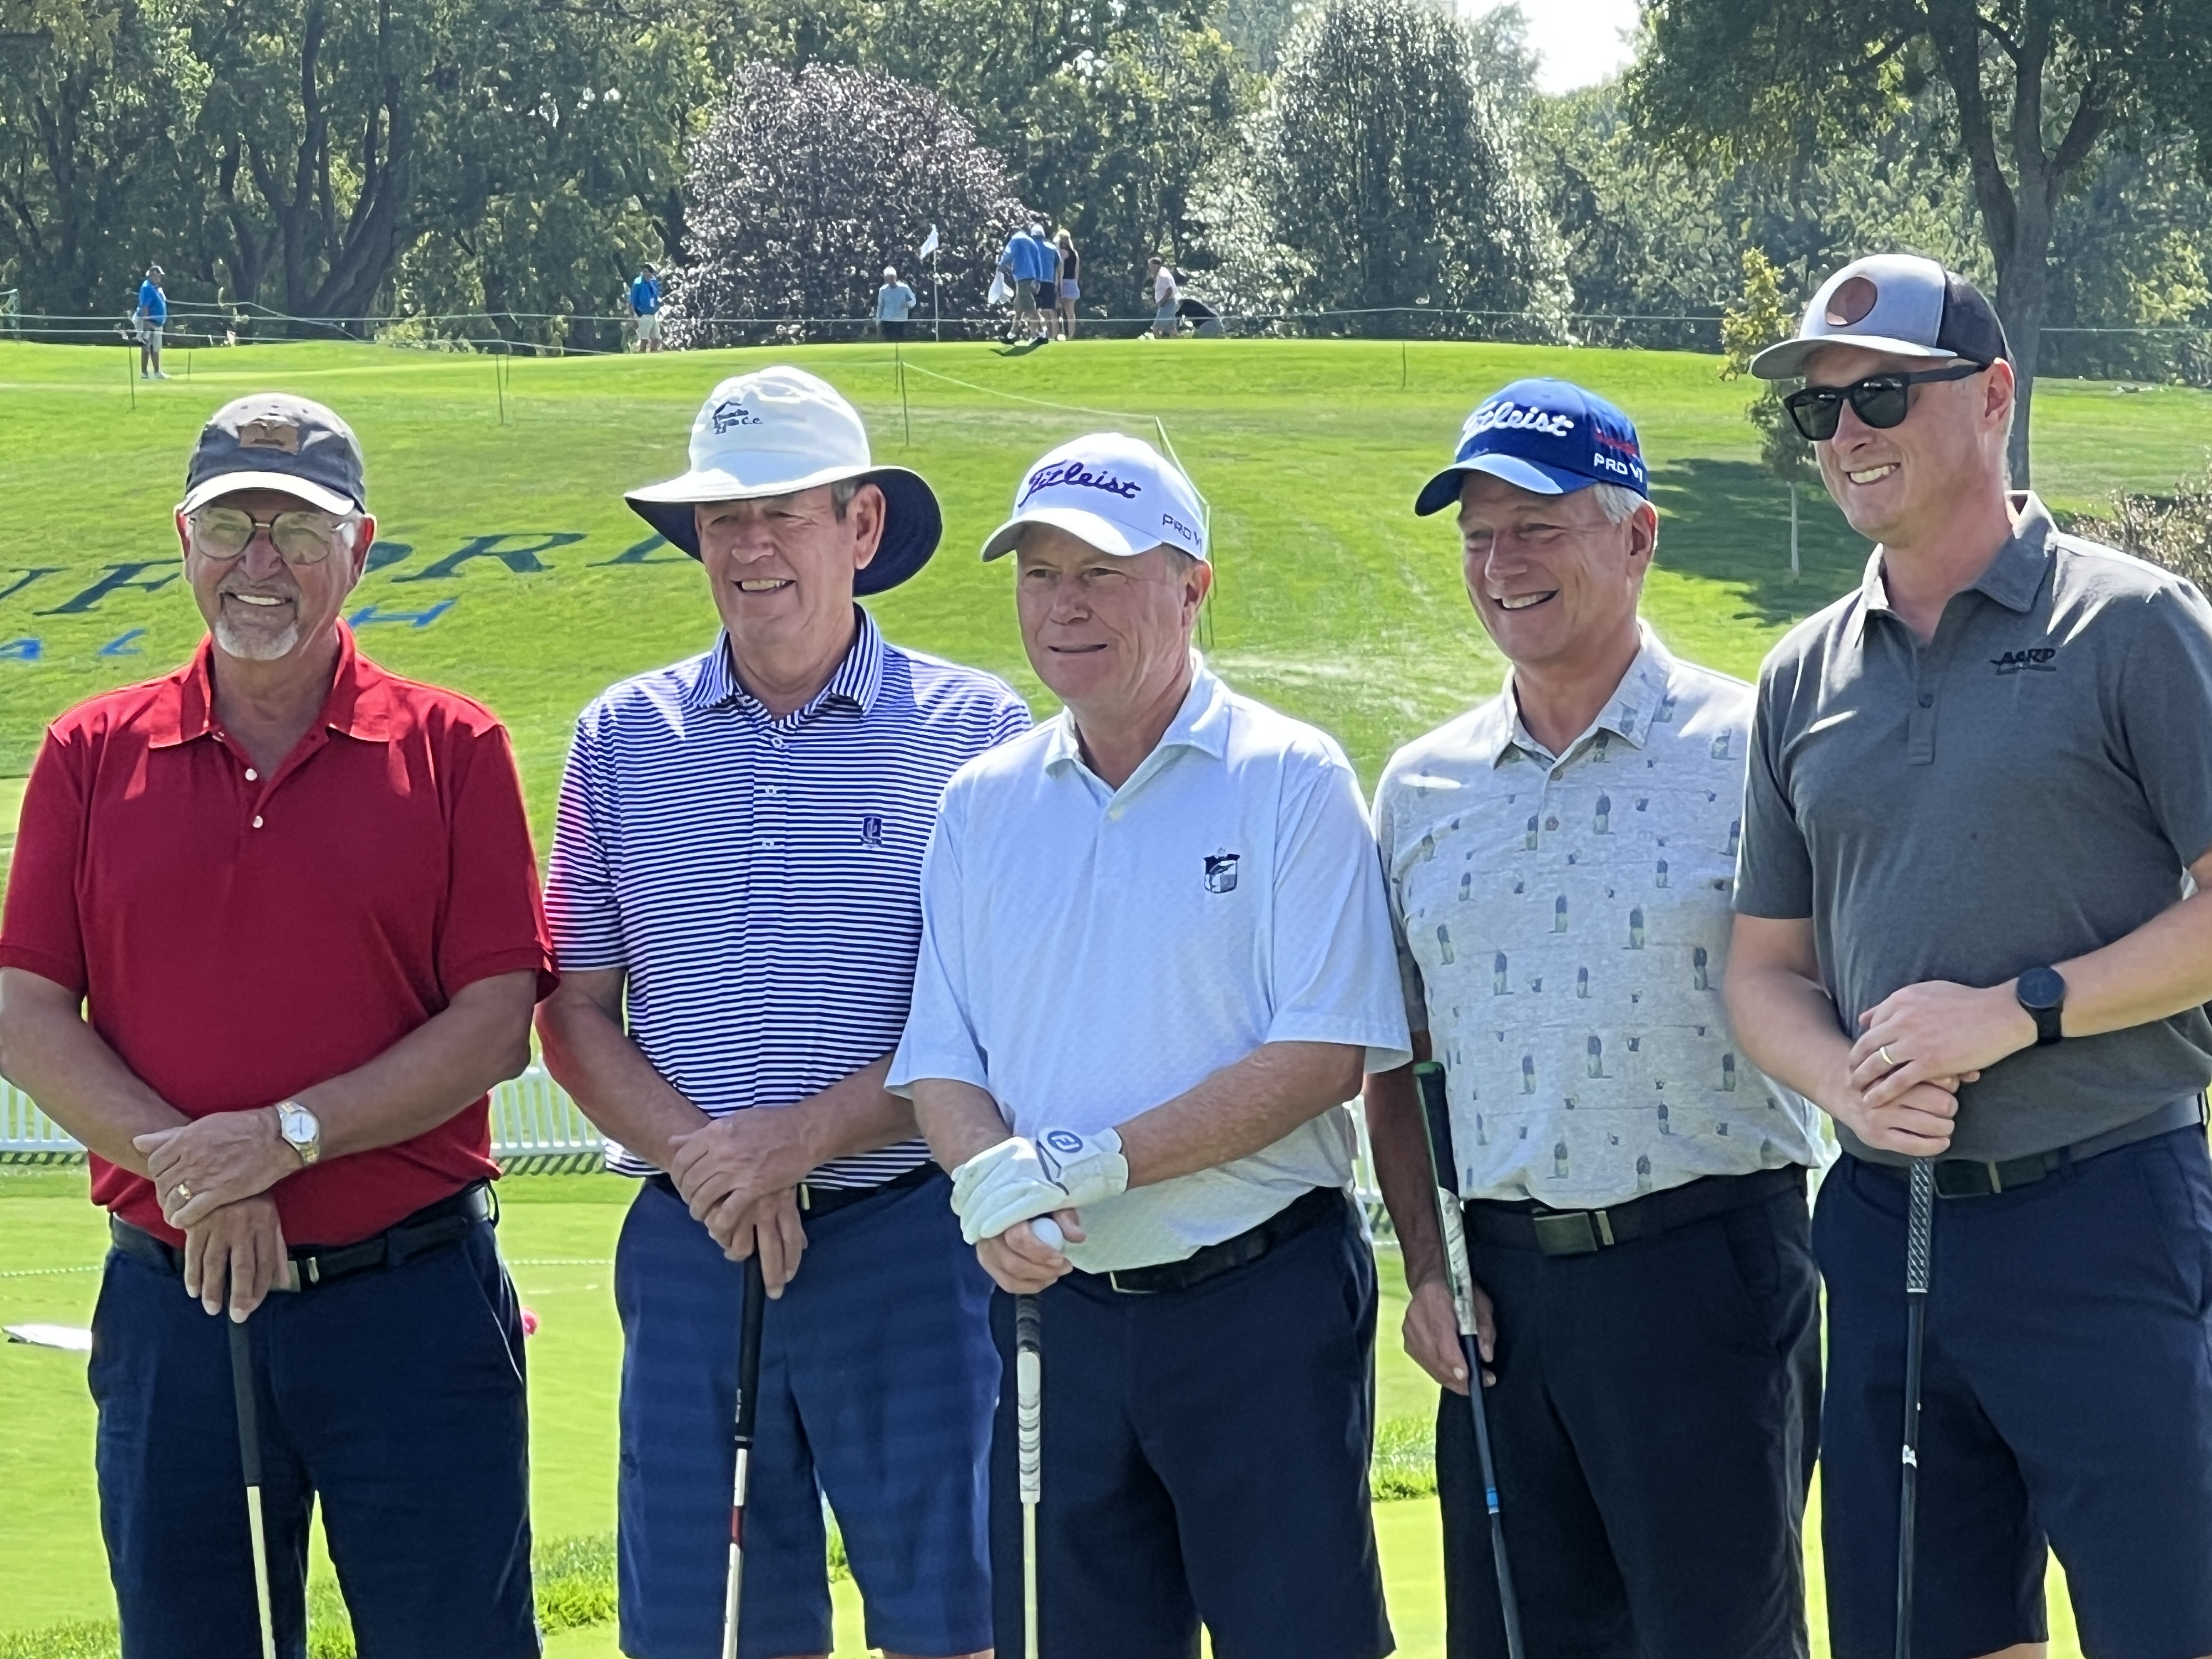 Five men, including PGA TOUR Champions Professional Jeff Sluman, at the 2023 Sanford International.